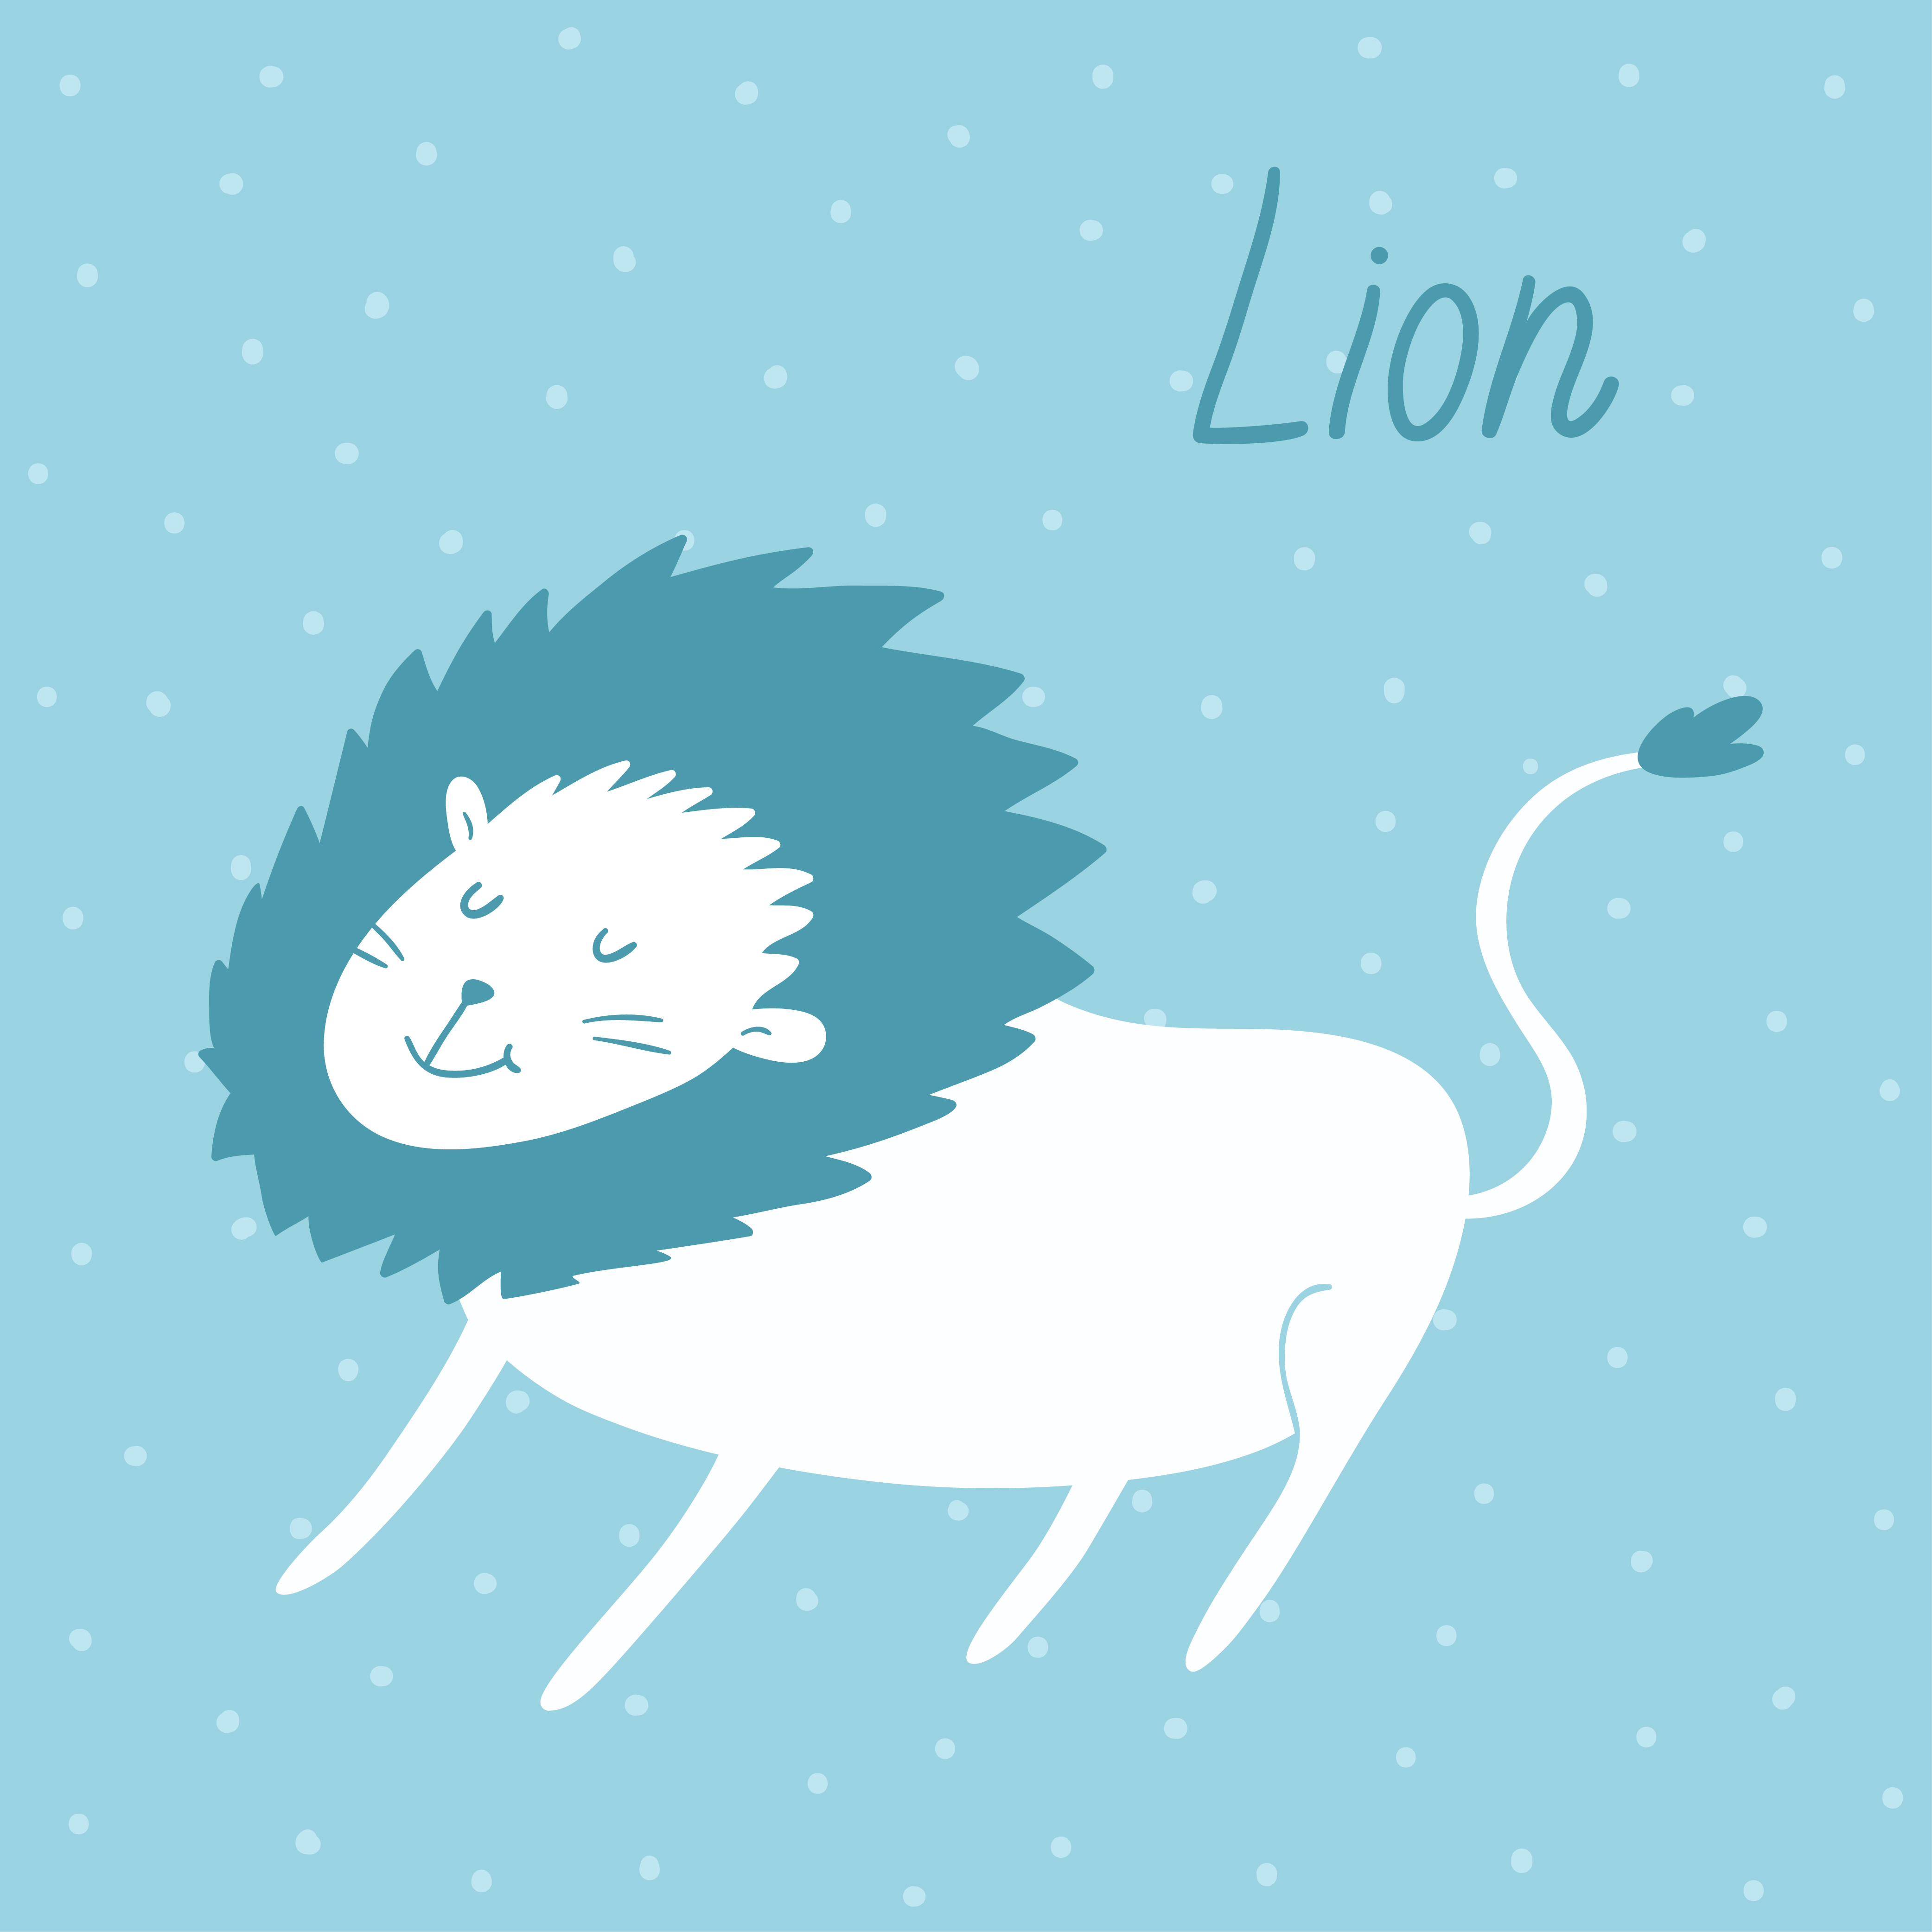 Vector illustration of a lion Photoshop brush